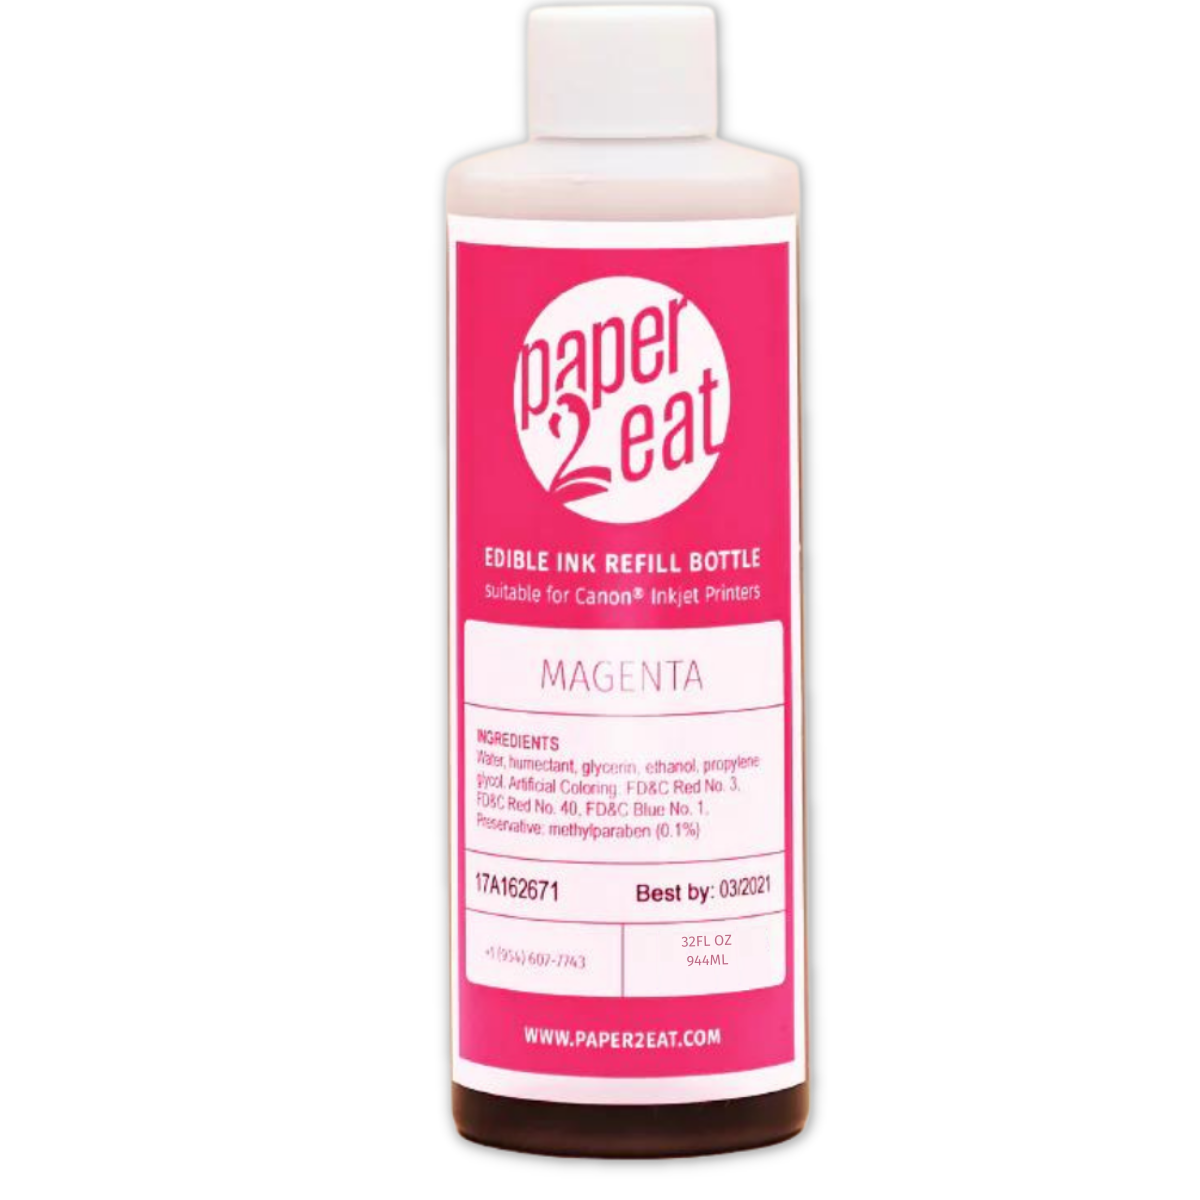 32 fl. oz. (944 ml) Magenta Edible Ink Refill Bottle